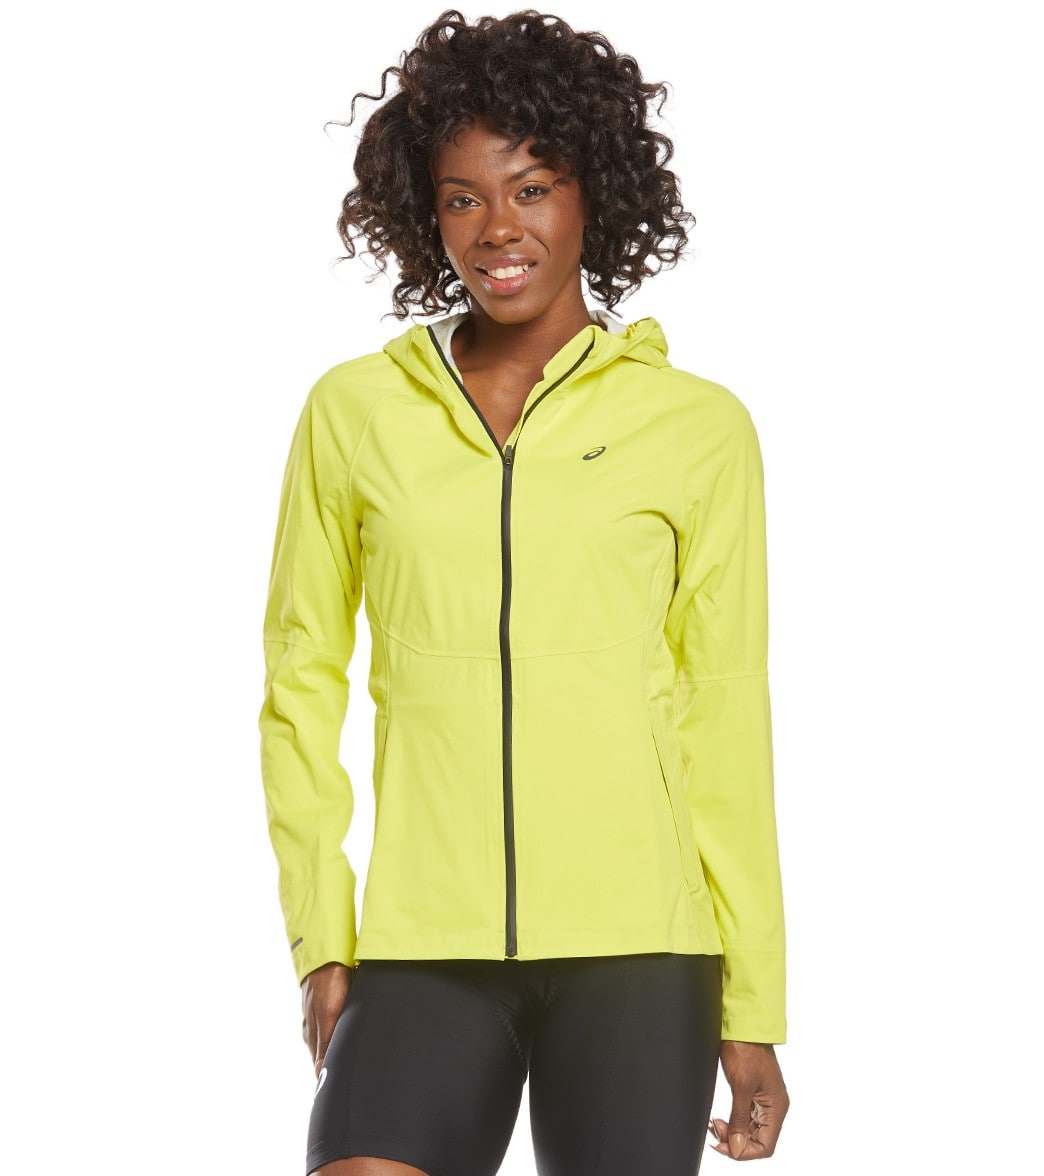 Asics Women's Accelerate Jacket - Lemon Spark Xl Polyester - Swimoutlet.com